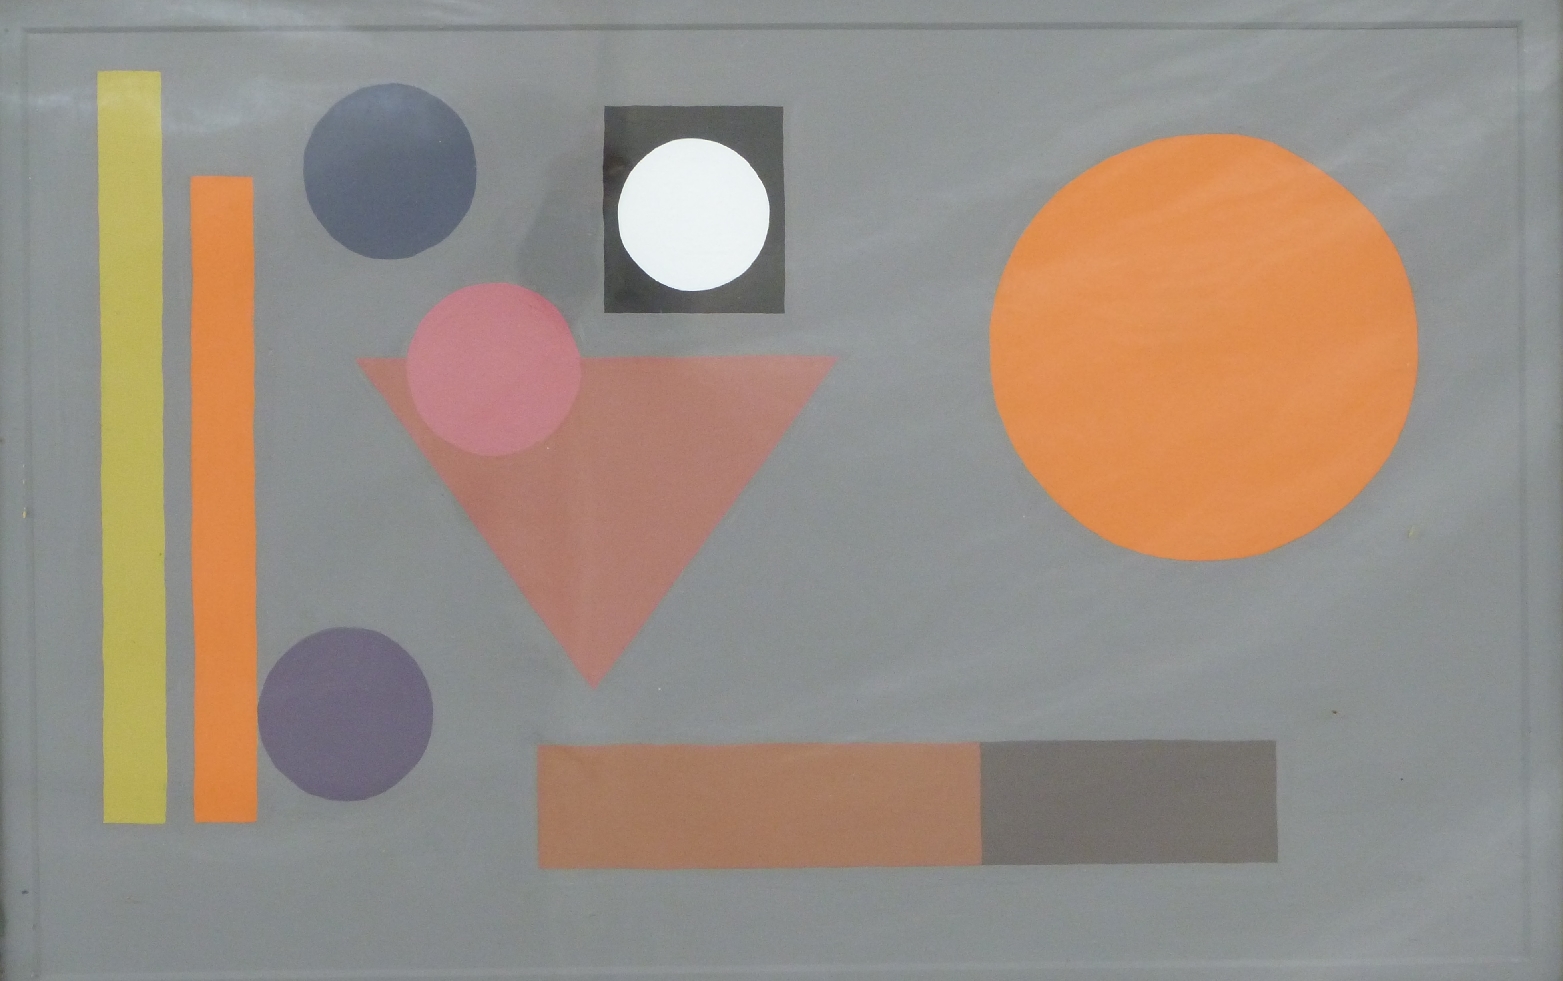 Alastair Stewart acrylic on board, titled verso Modern Geometric Abstract, Spring 1972, 33 x 52cm